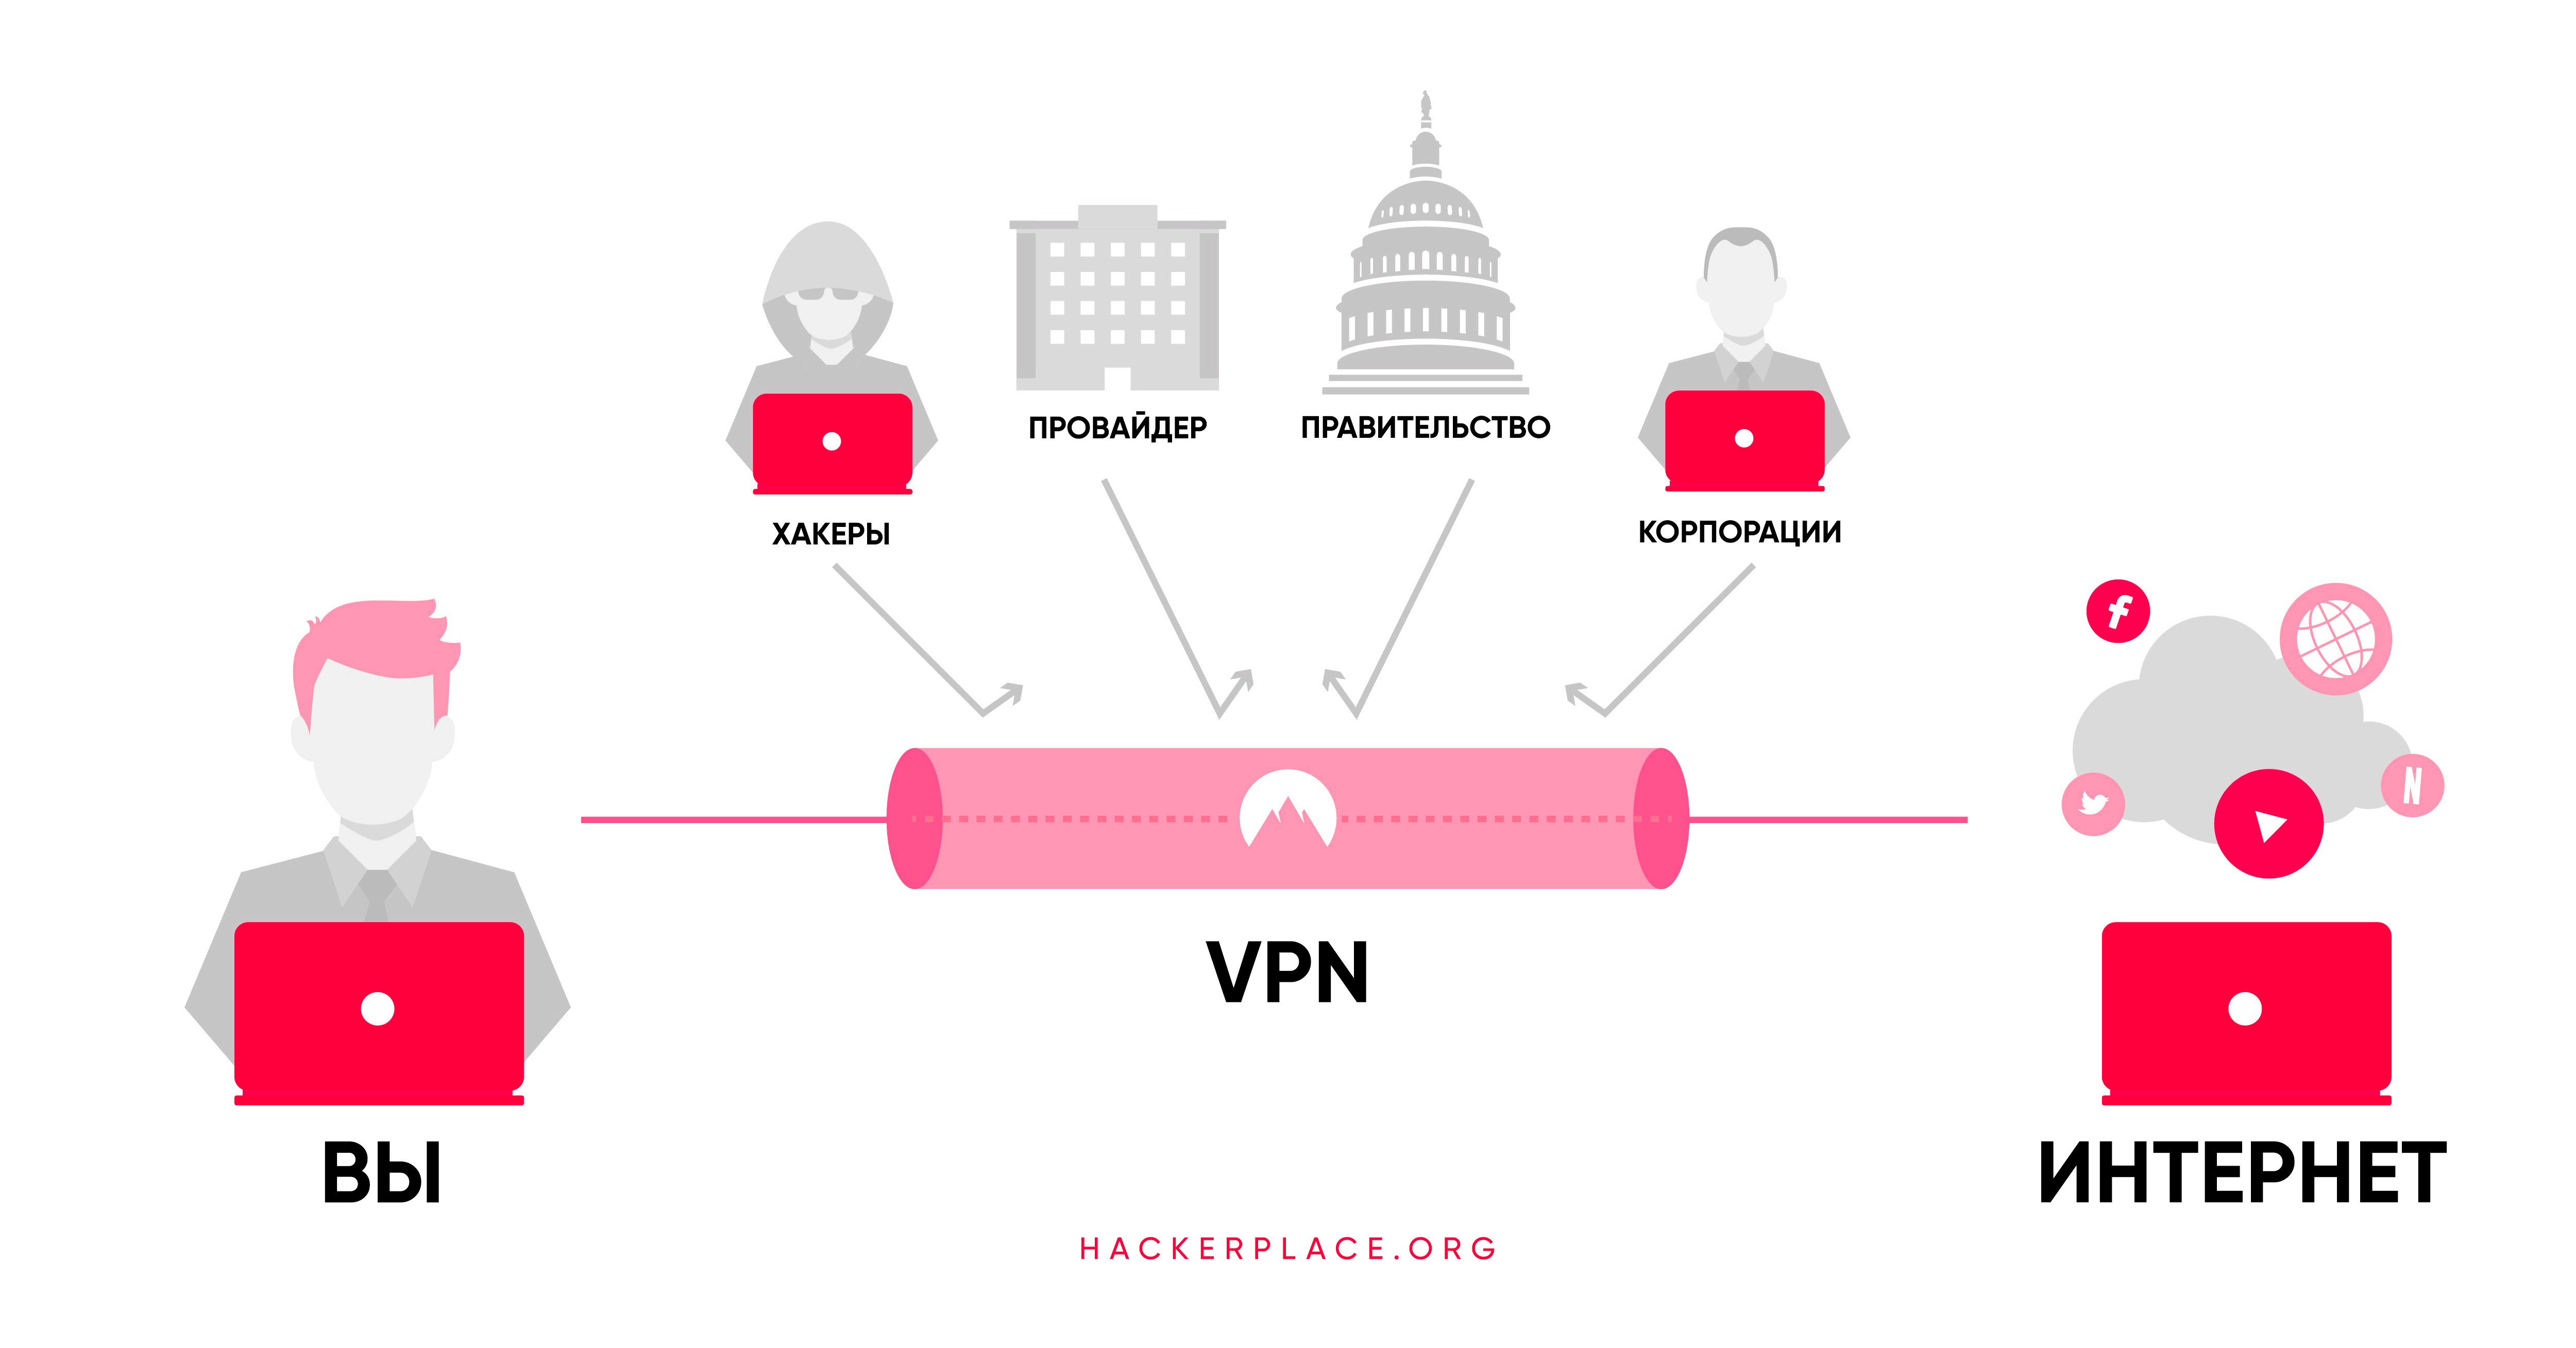 VPN анонимность. Законно ли впн. Заблокируют ли впн. Может ли впн влиять на интернет. Почему нельзя впн